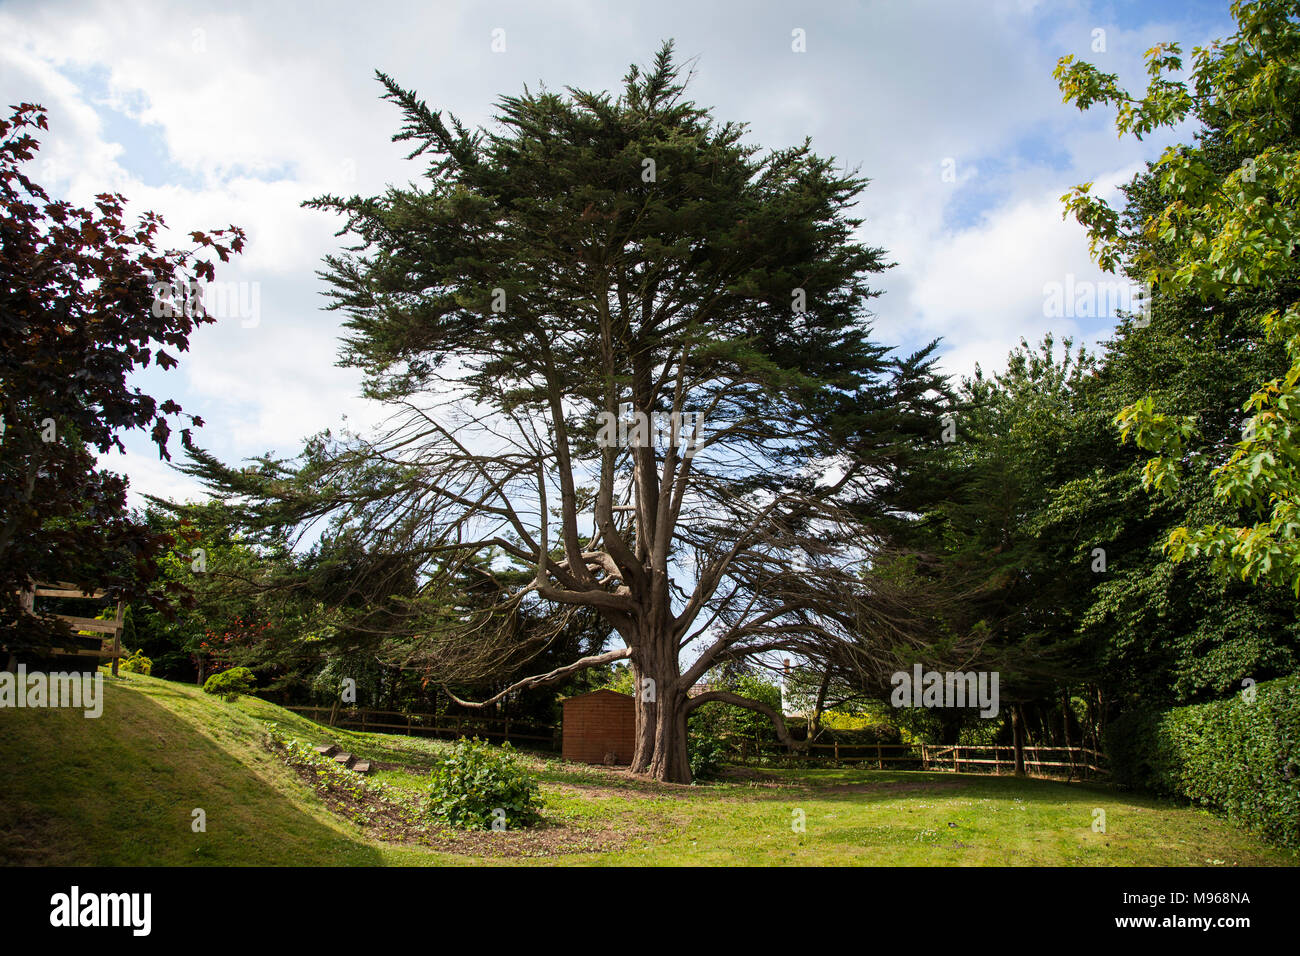 Monterey Cyprus tree in a Devon garden - Cupressus macrocarpa, with a garden shed underneath Stock Photo